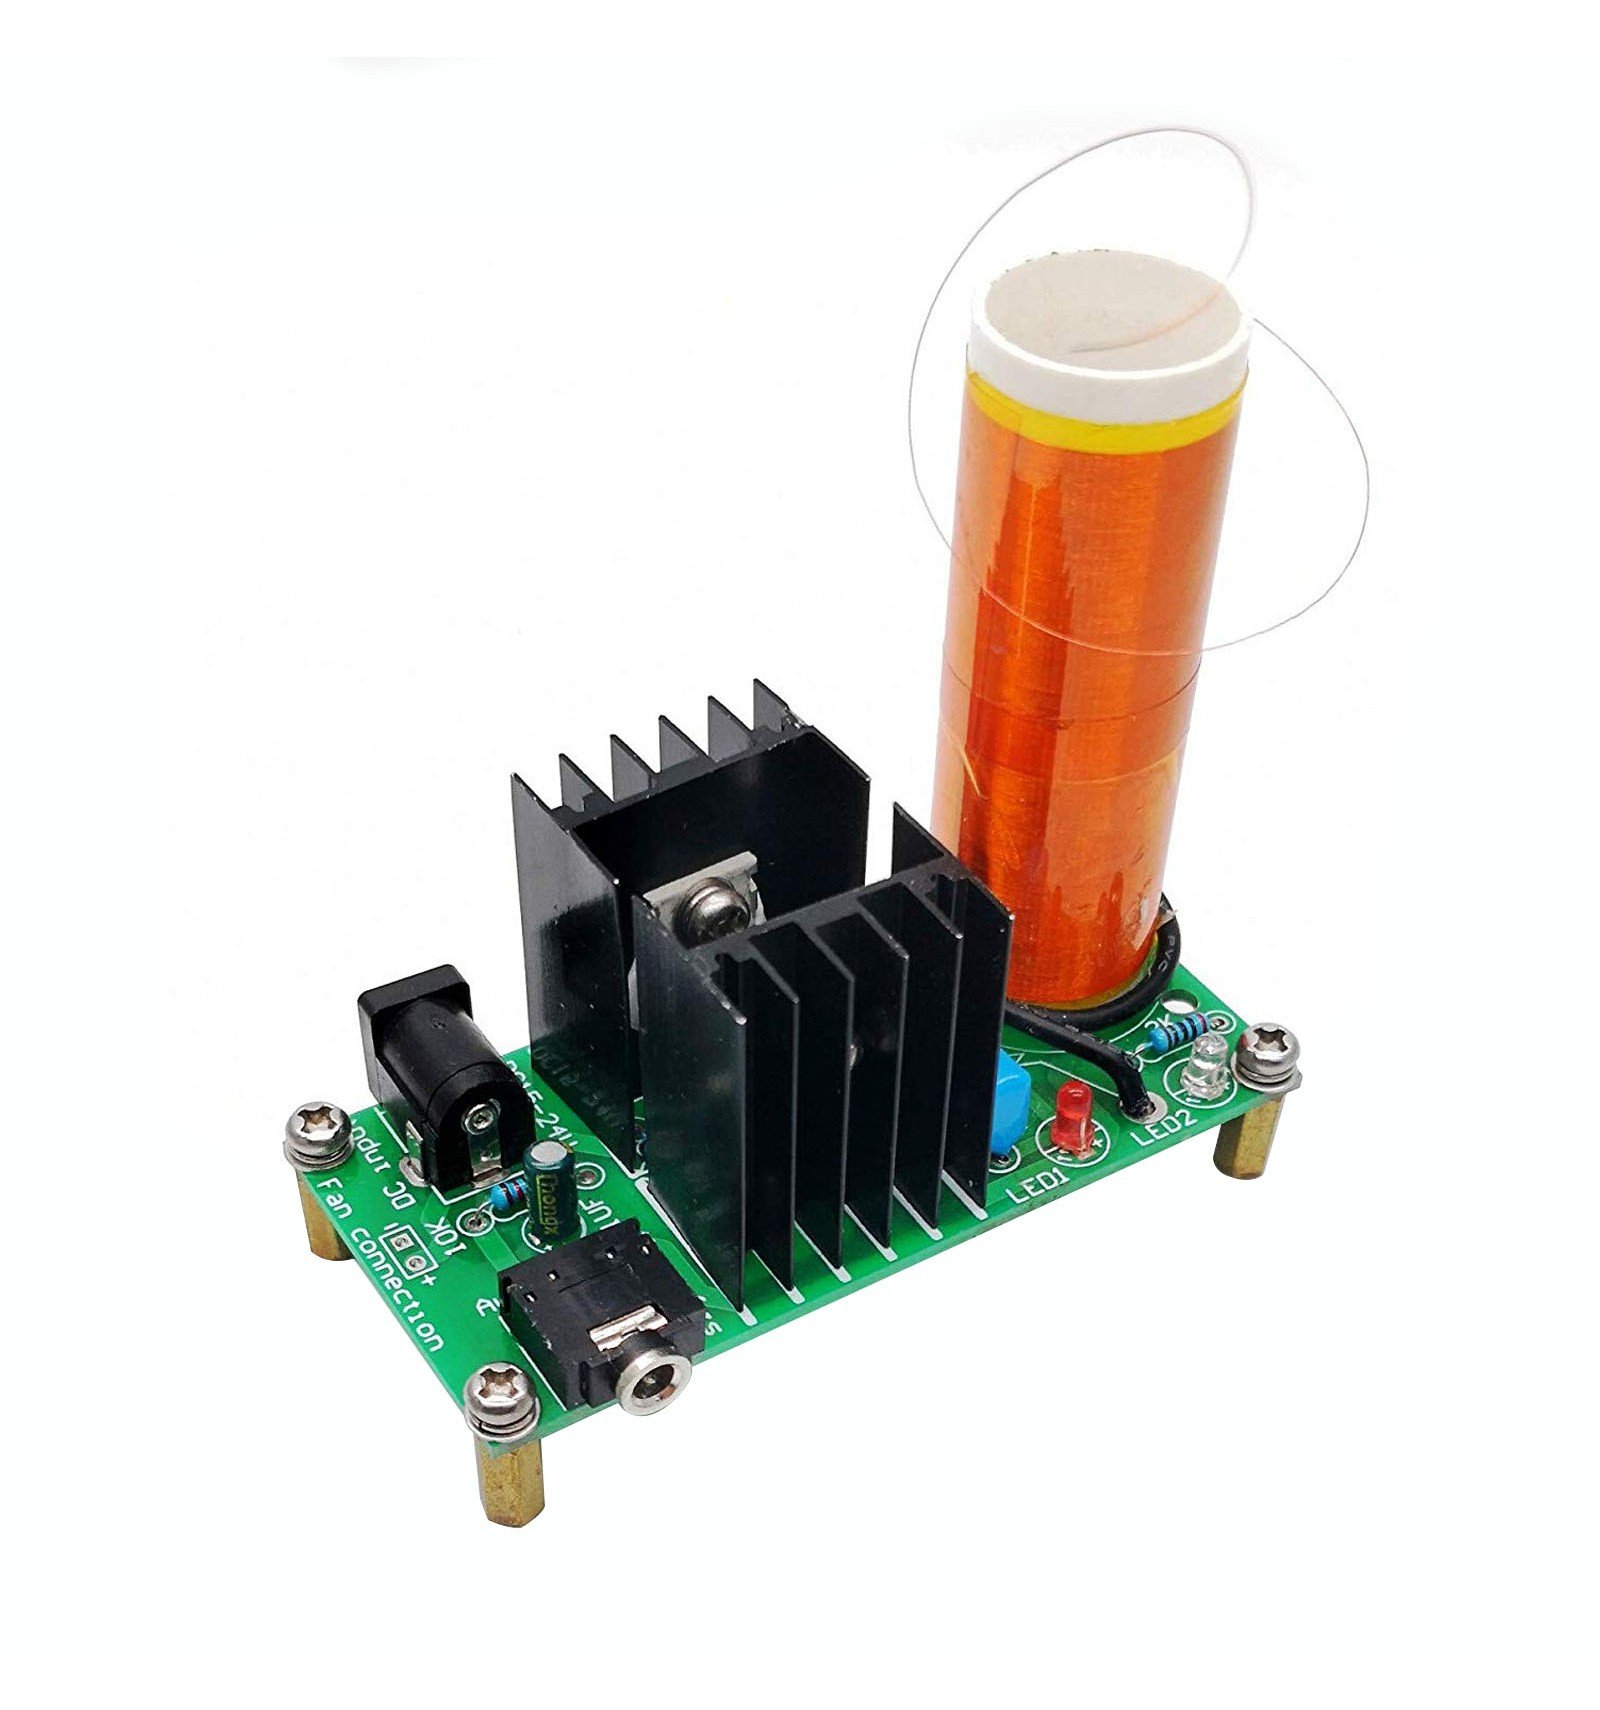 https://www.diyelectronics.co.za/store/9042-thickbox_default/diy-mini-tesla-coil-kit-15w-plasma-speaker-with-35mm-audio-input.jpg